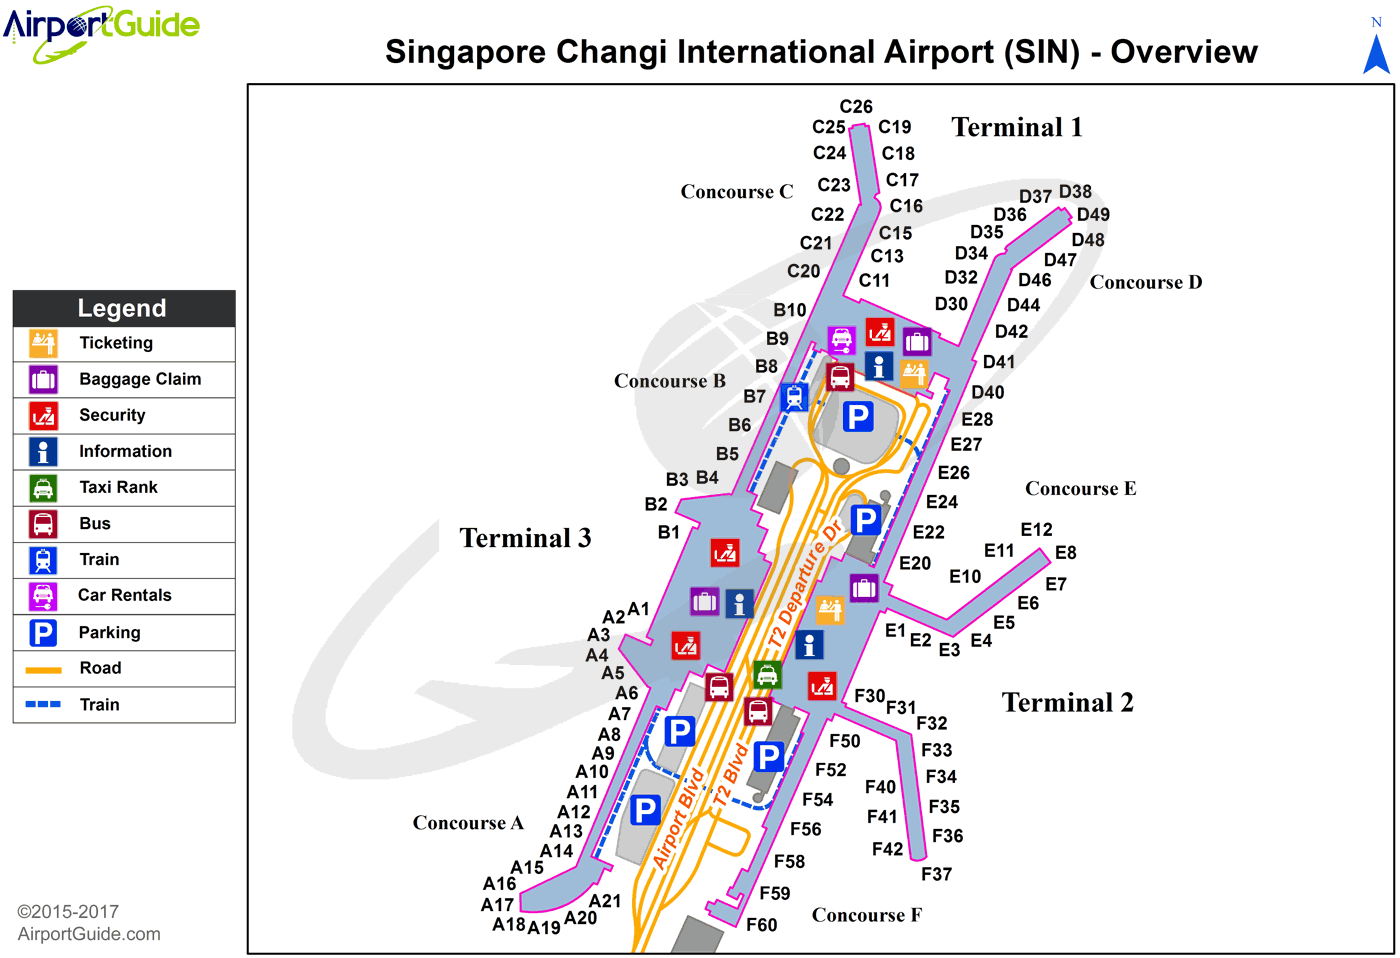 Singapore - Singapore Changi International (SIN) Airport Terminal Map - Overview